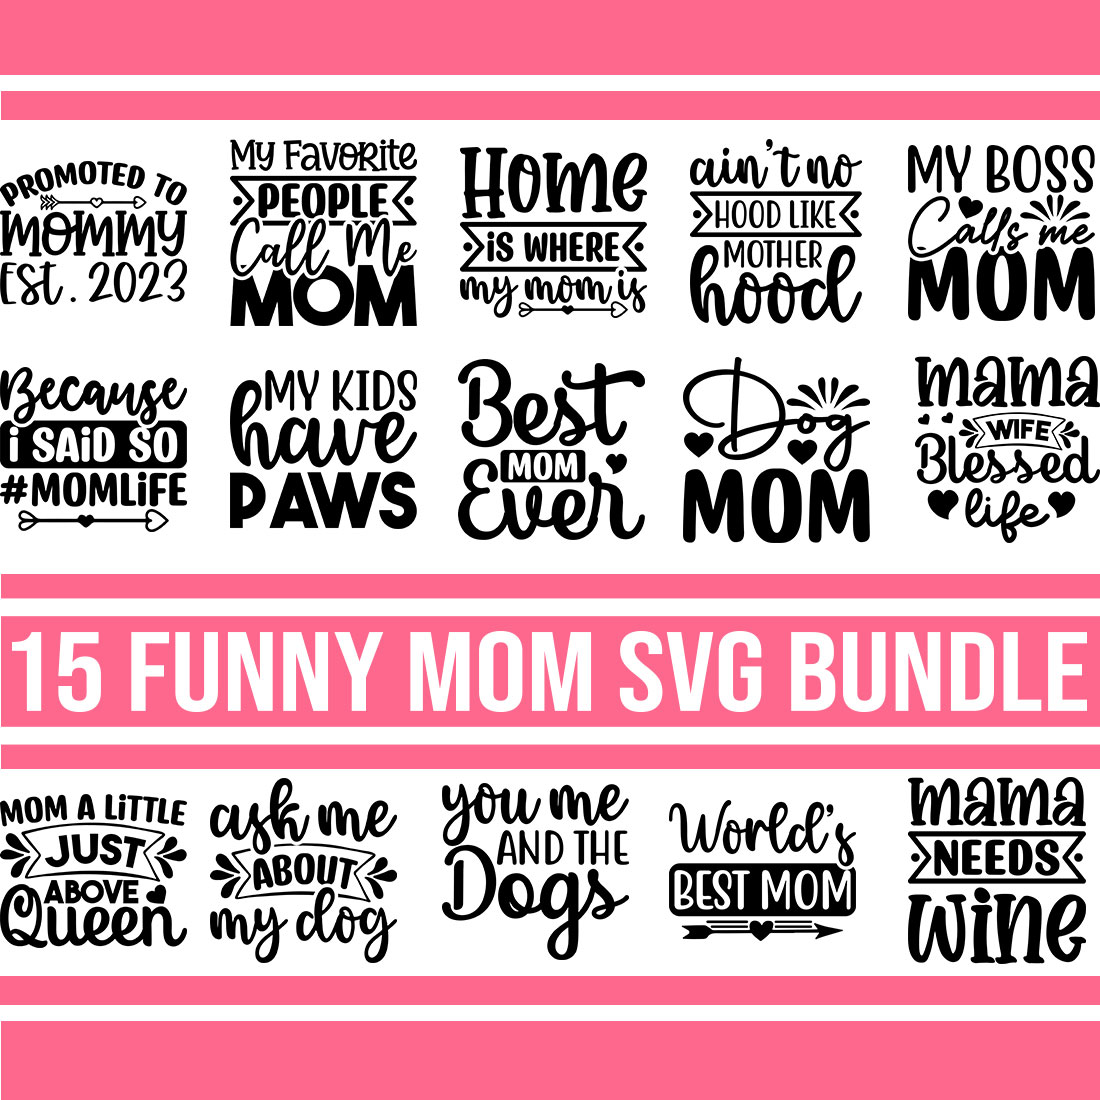 Funny Mom SVG Bundle preview image.